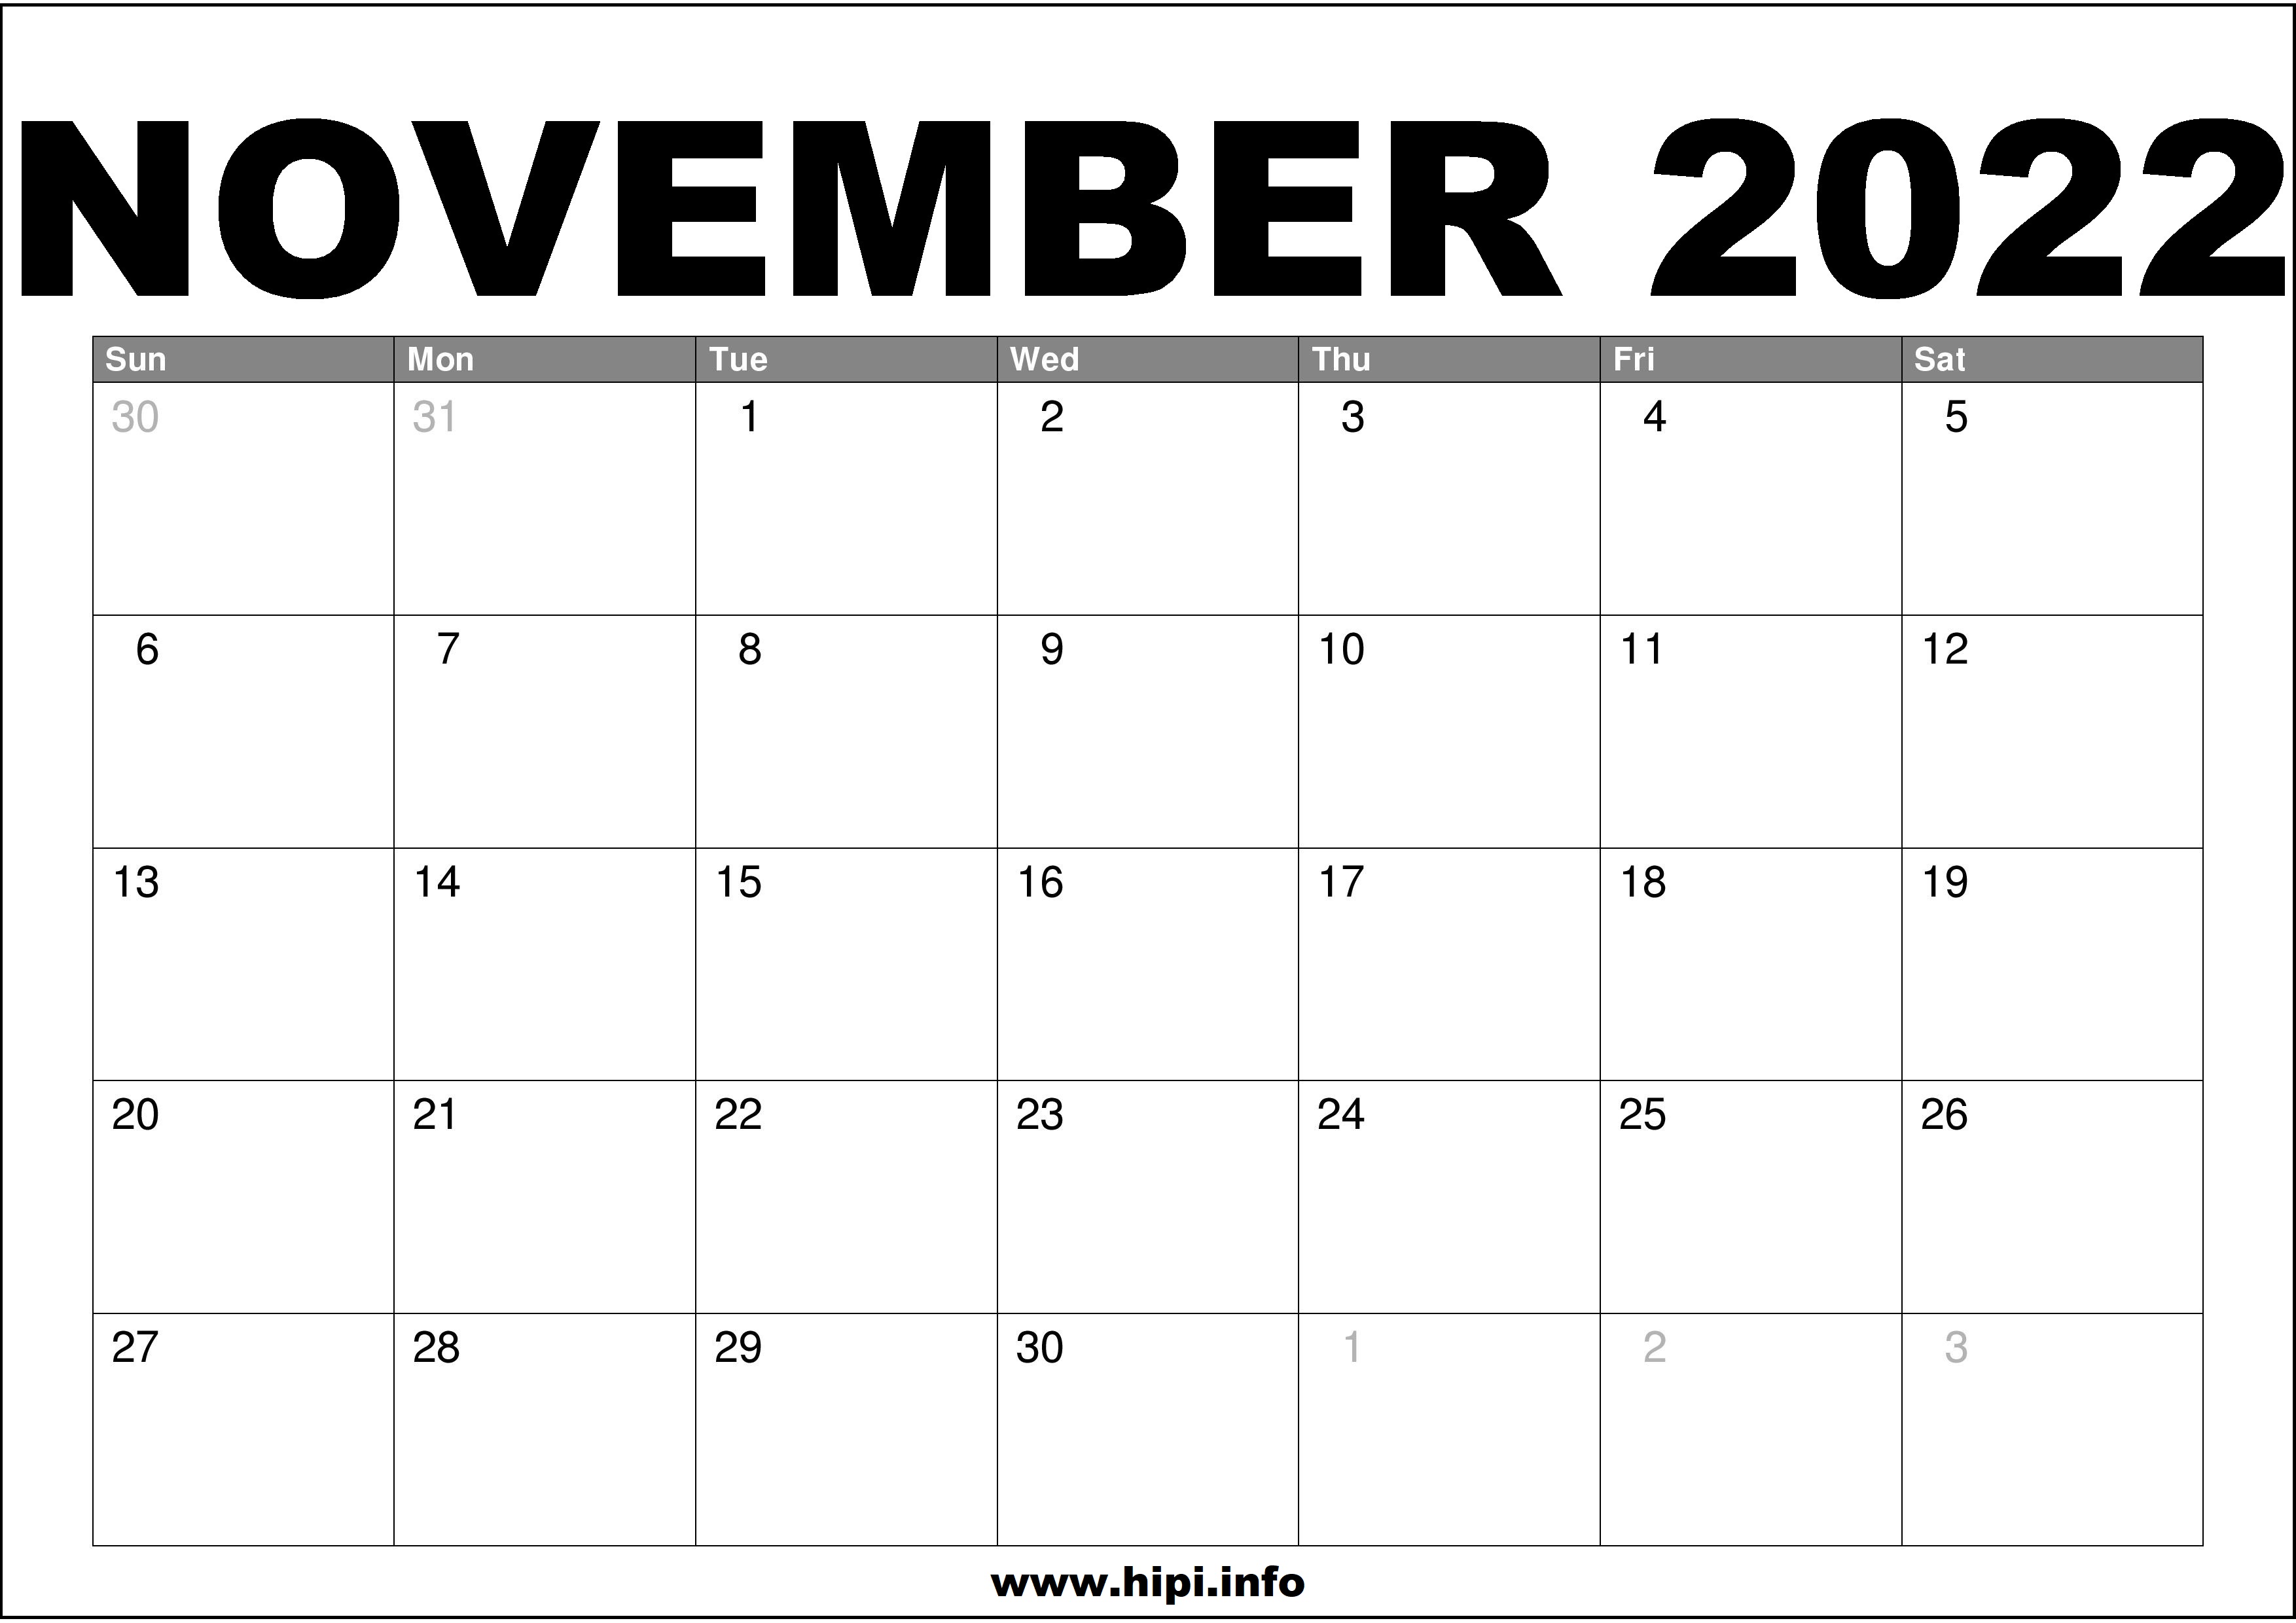 Nov Calendar 2022 Printable November 2022 Calendar Printable Free - Hipi.info | Calendars Printable Free